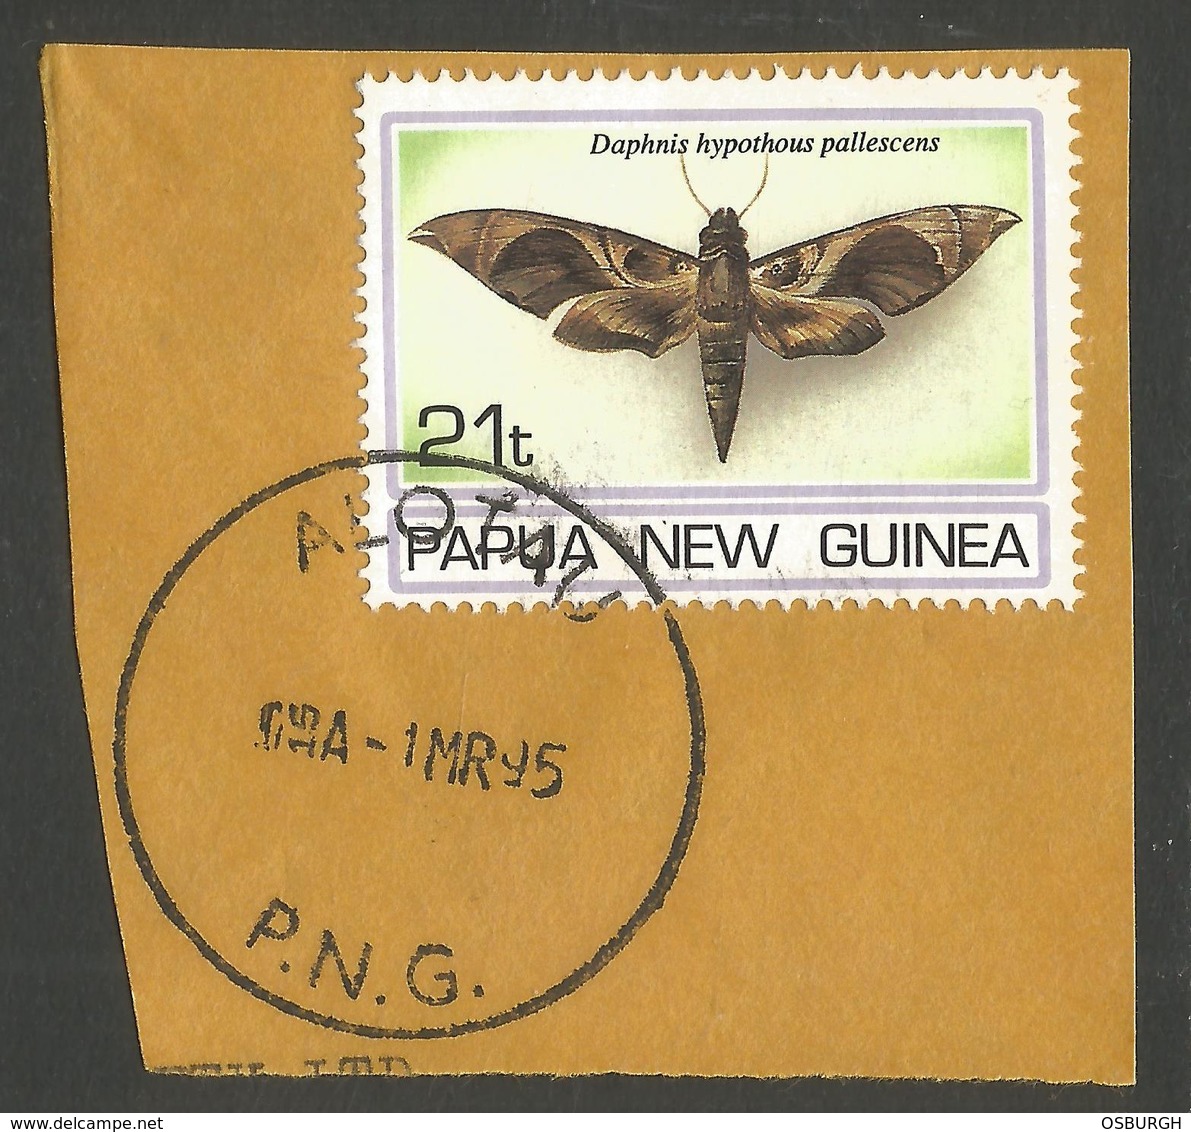 PAPUA NEW GUINEA. BUTTERFLIES. ALOTAU POSTMARK. USED - Papua New Guinea